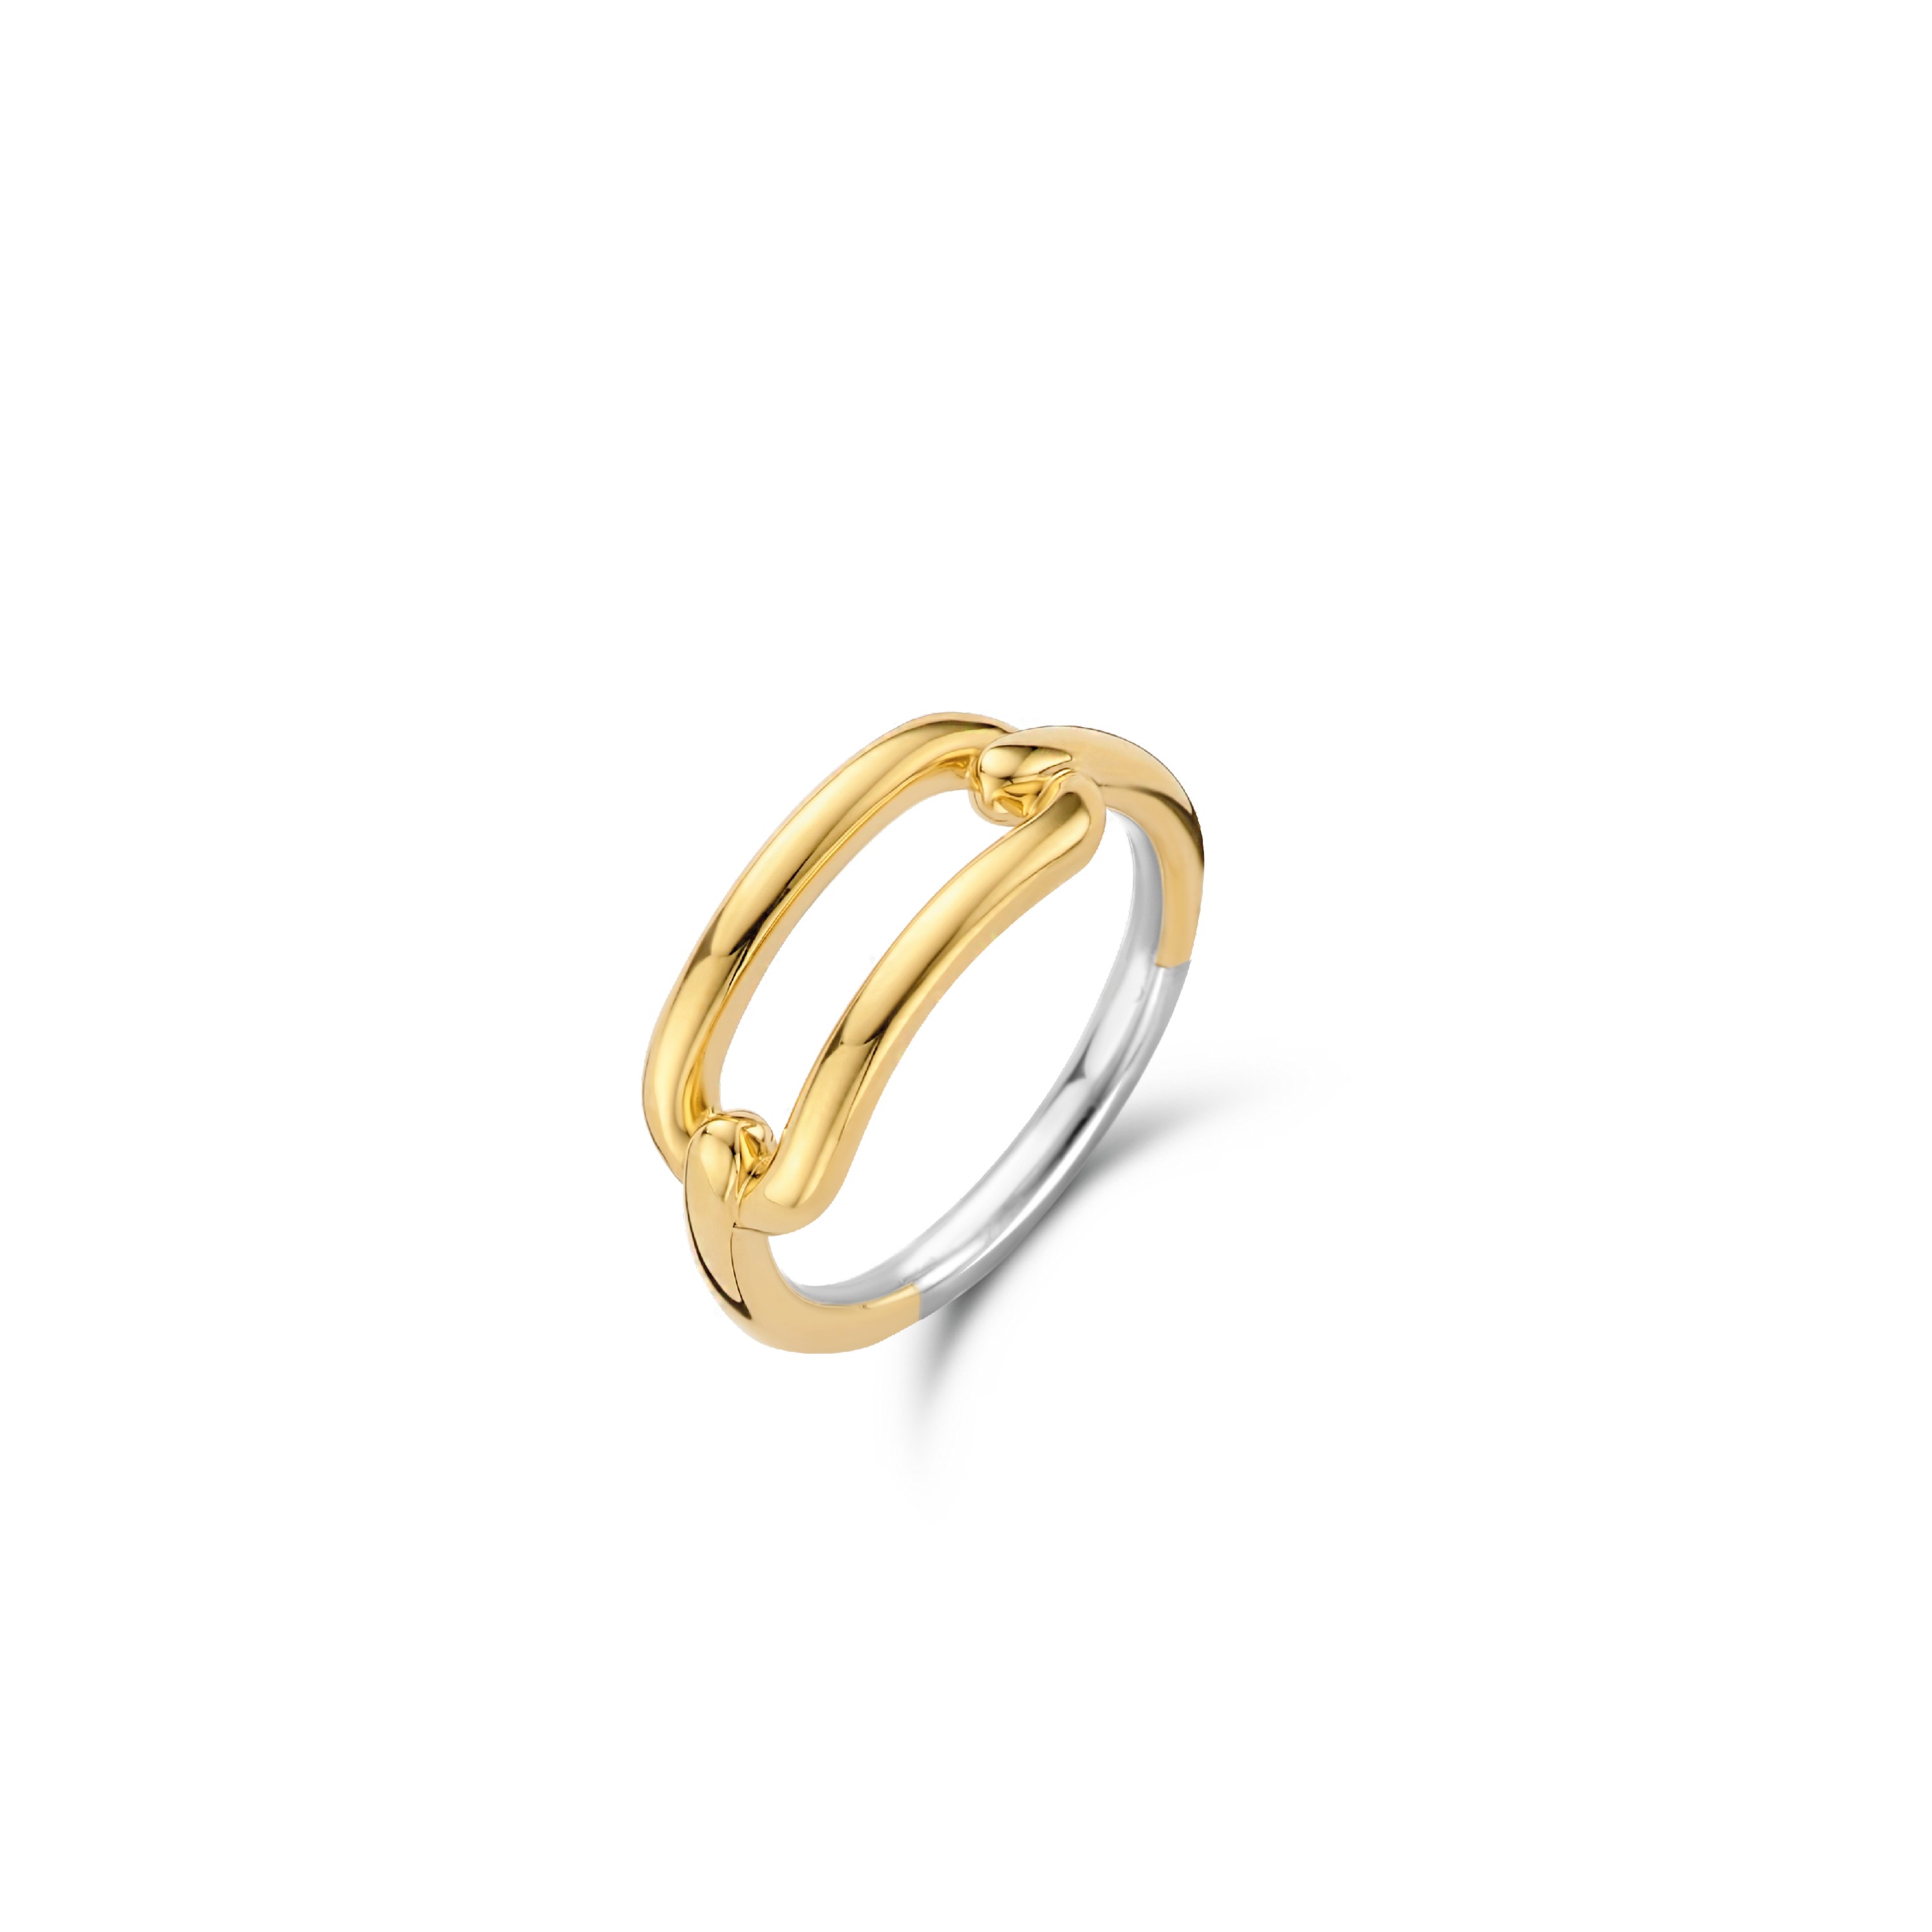 TI SENTO - Milano Ring 12229SY Gala Jewelers Inc. White Oak, PA